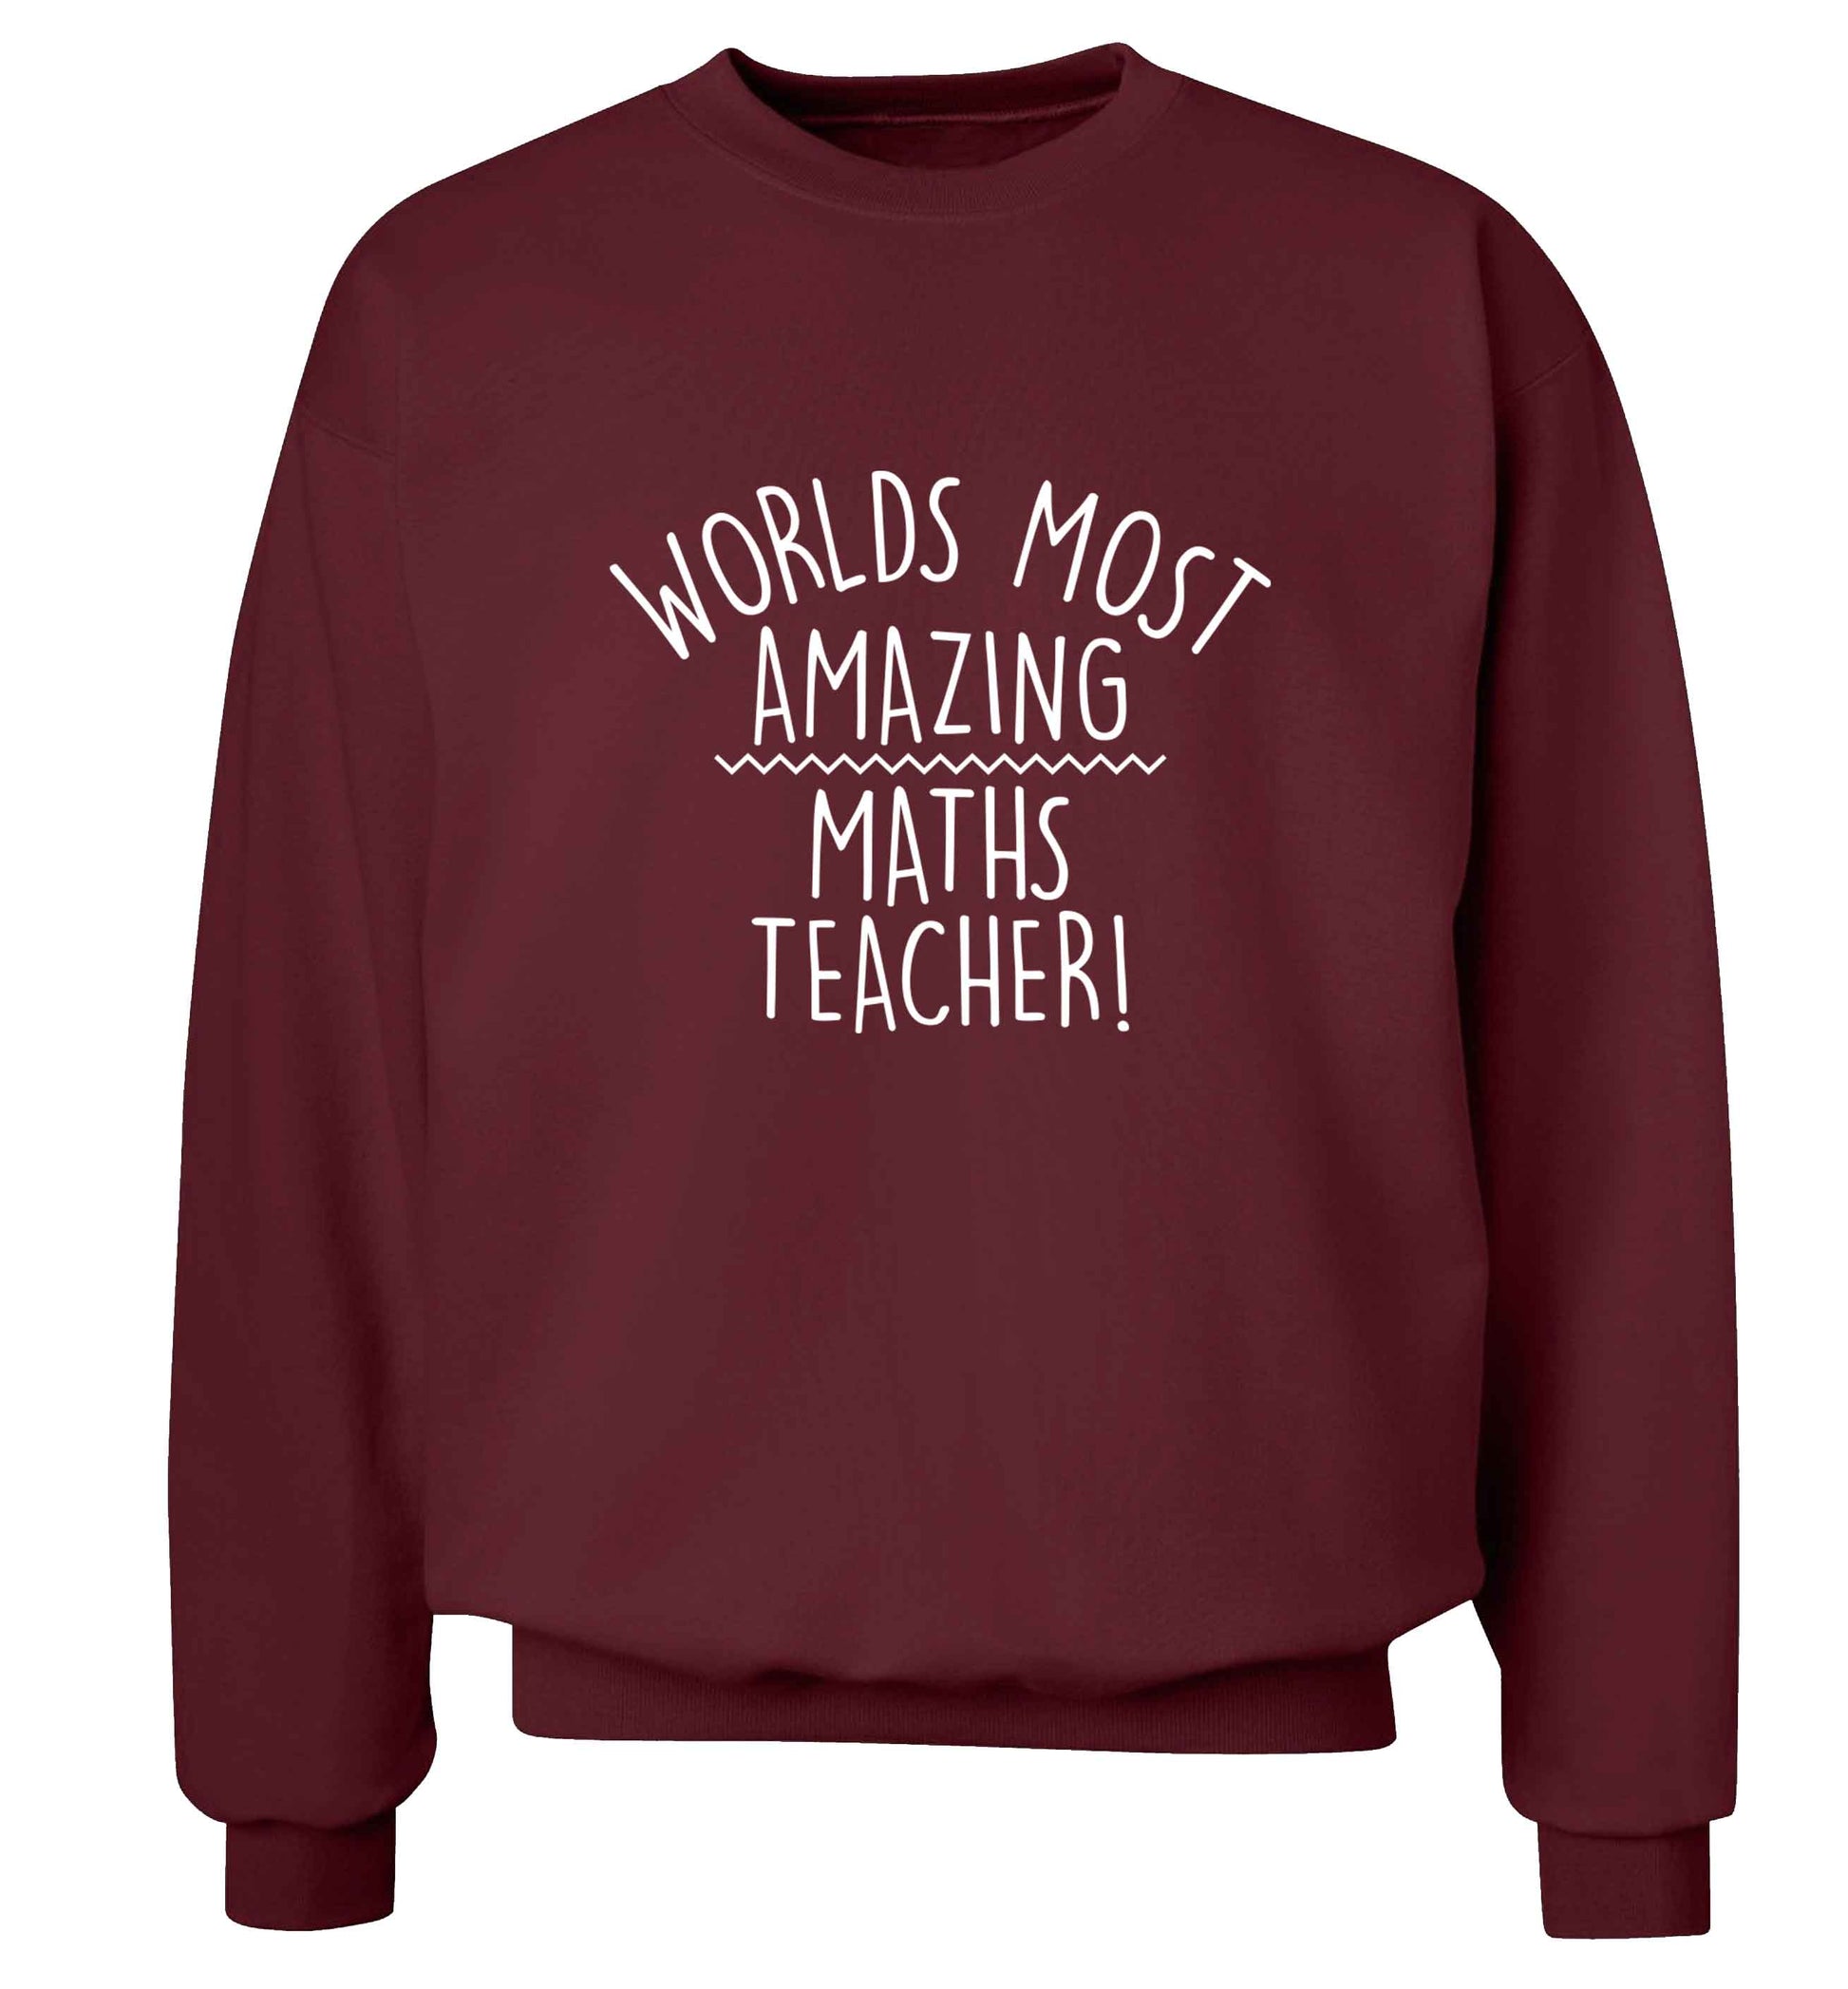 Worlds most amazing maths teacher adult's unisex maroon sweater 2XL